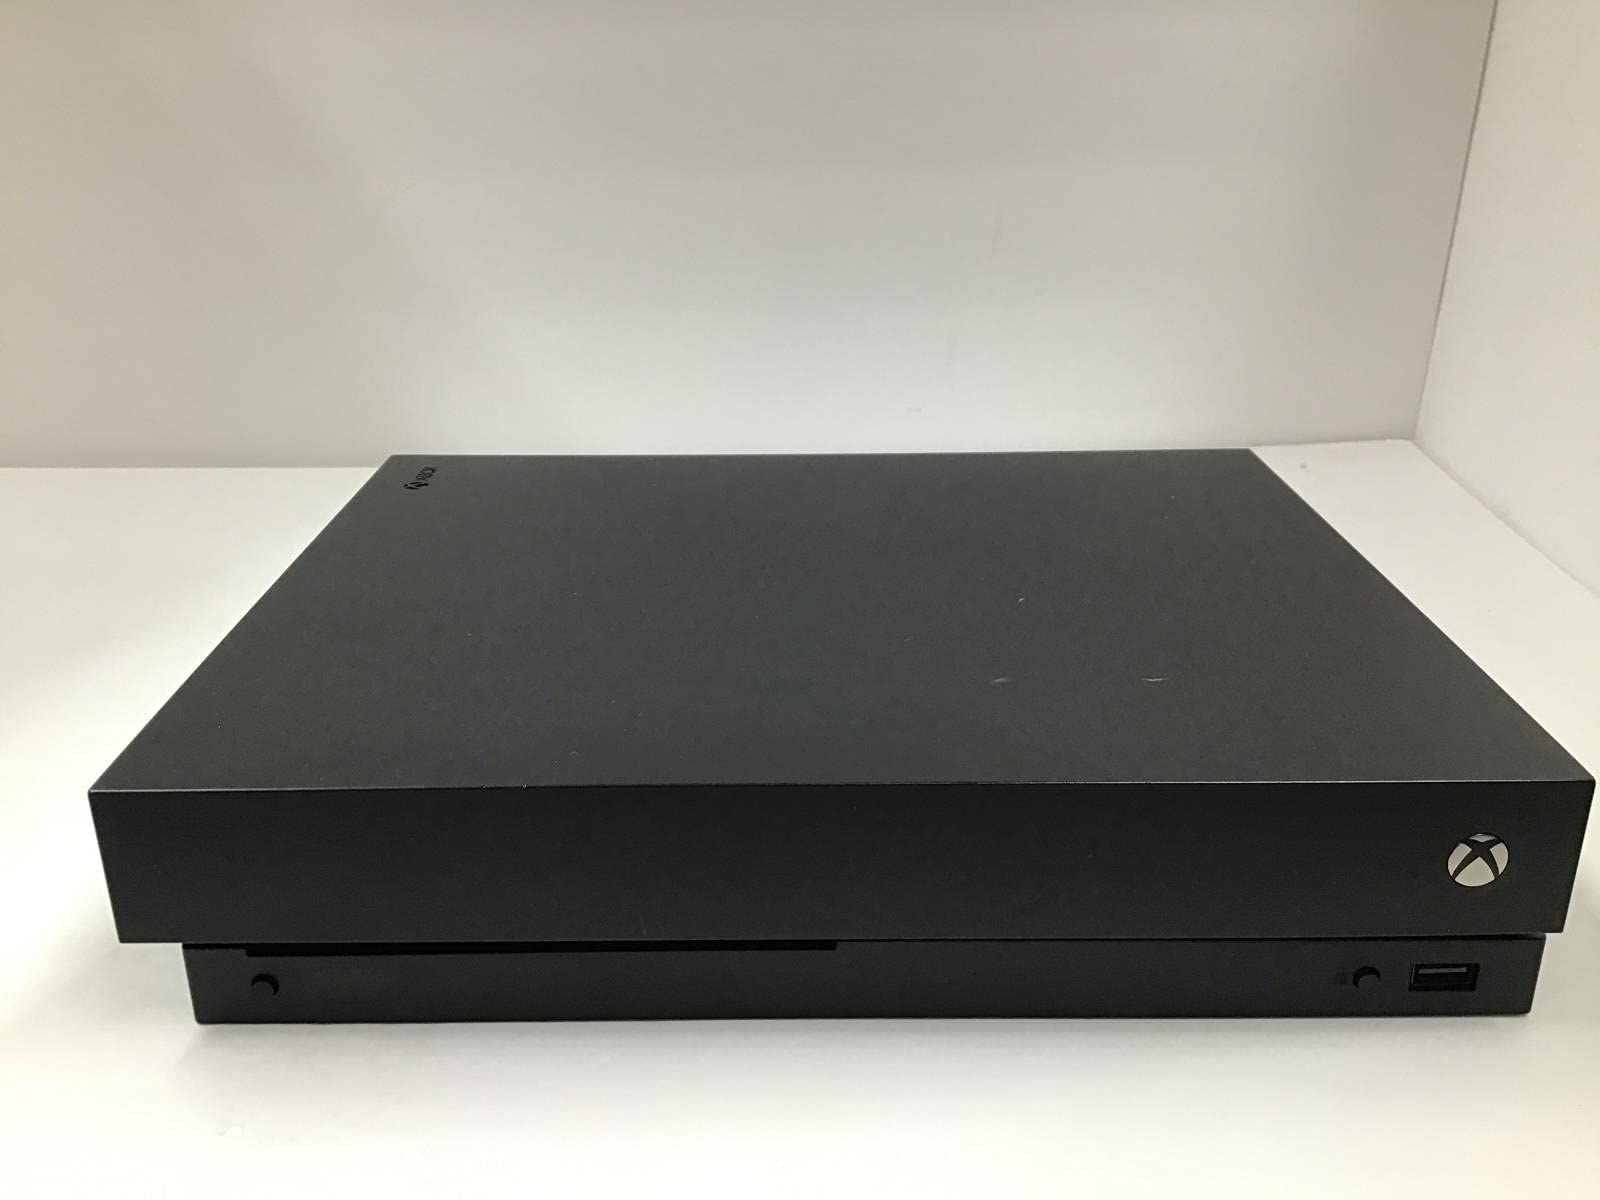 Microsoft FMQ-00042 Console, 18.5" x 12" x 5", Black